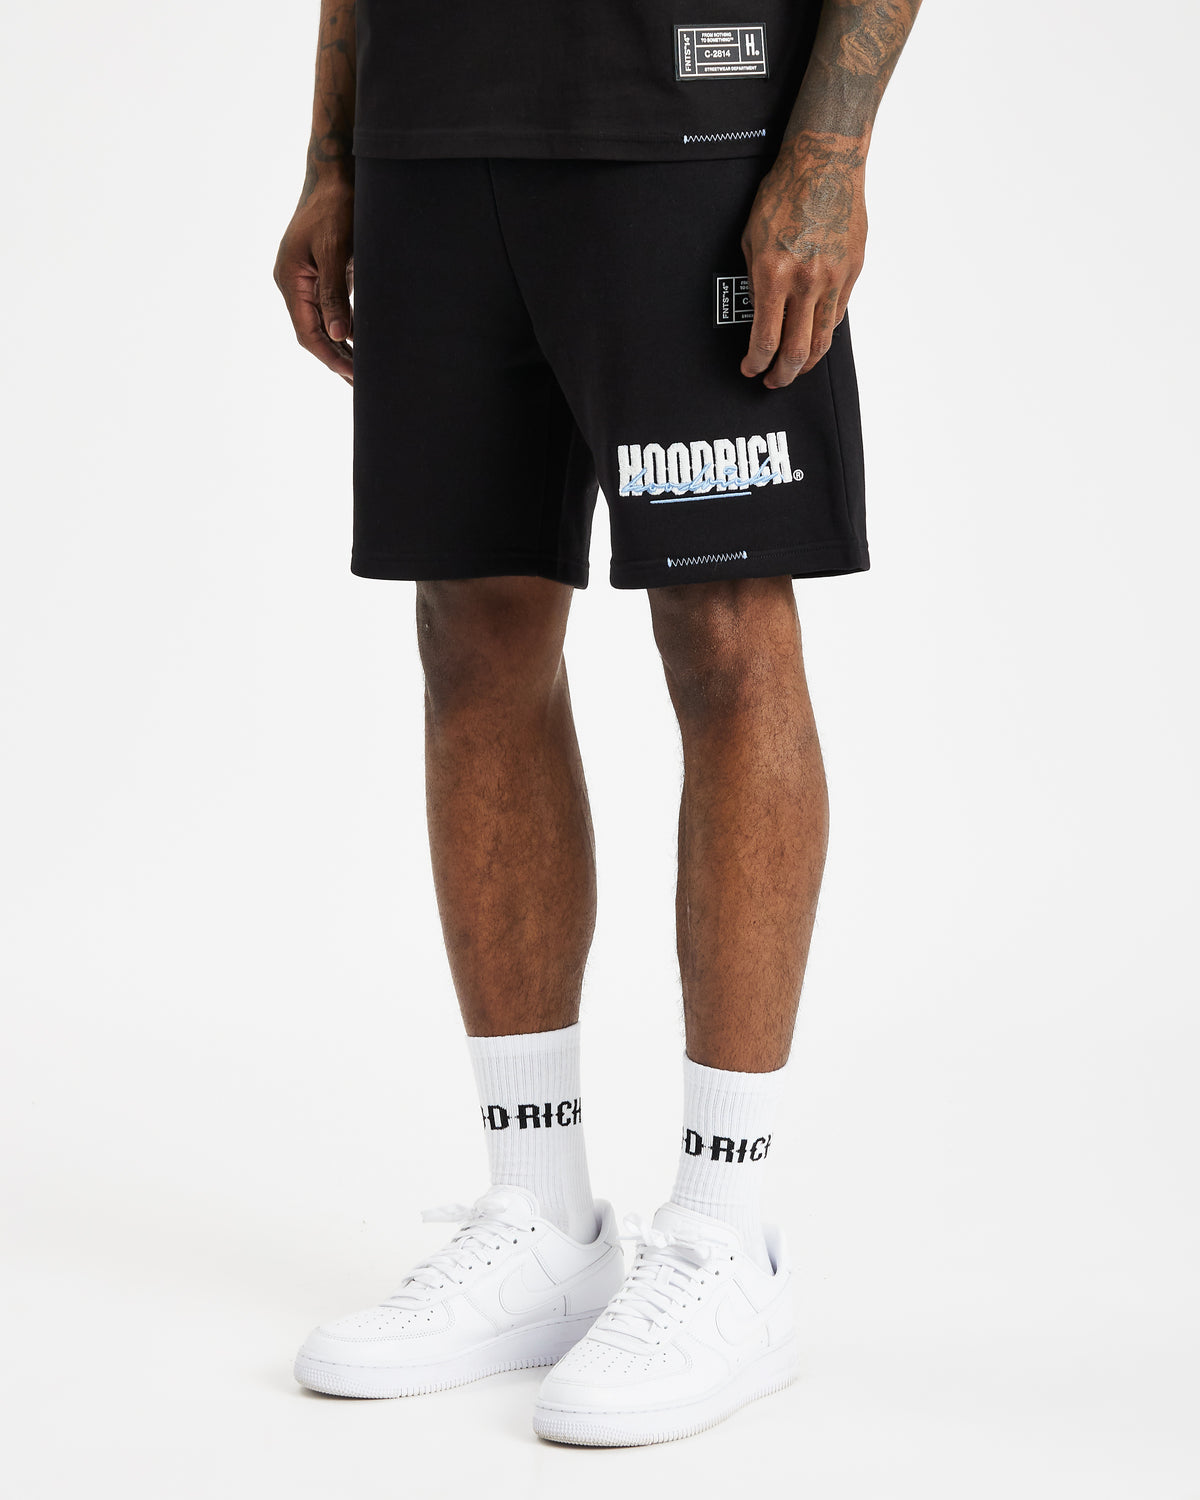 OG Blend V2 Shorts - Black/White/Placid Blue/Grey